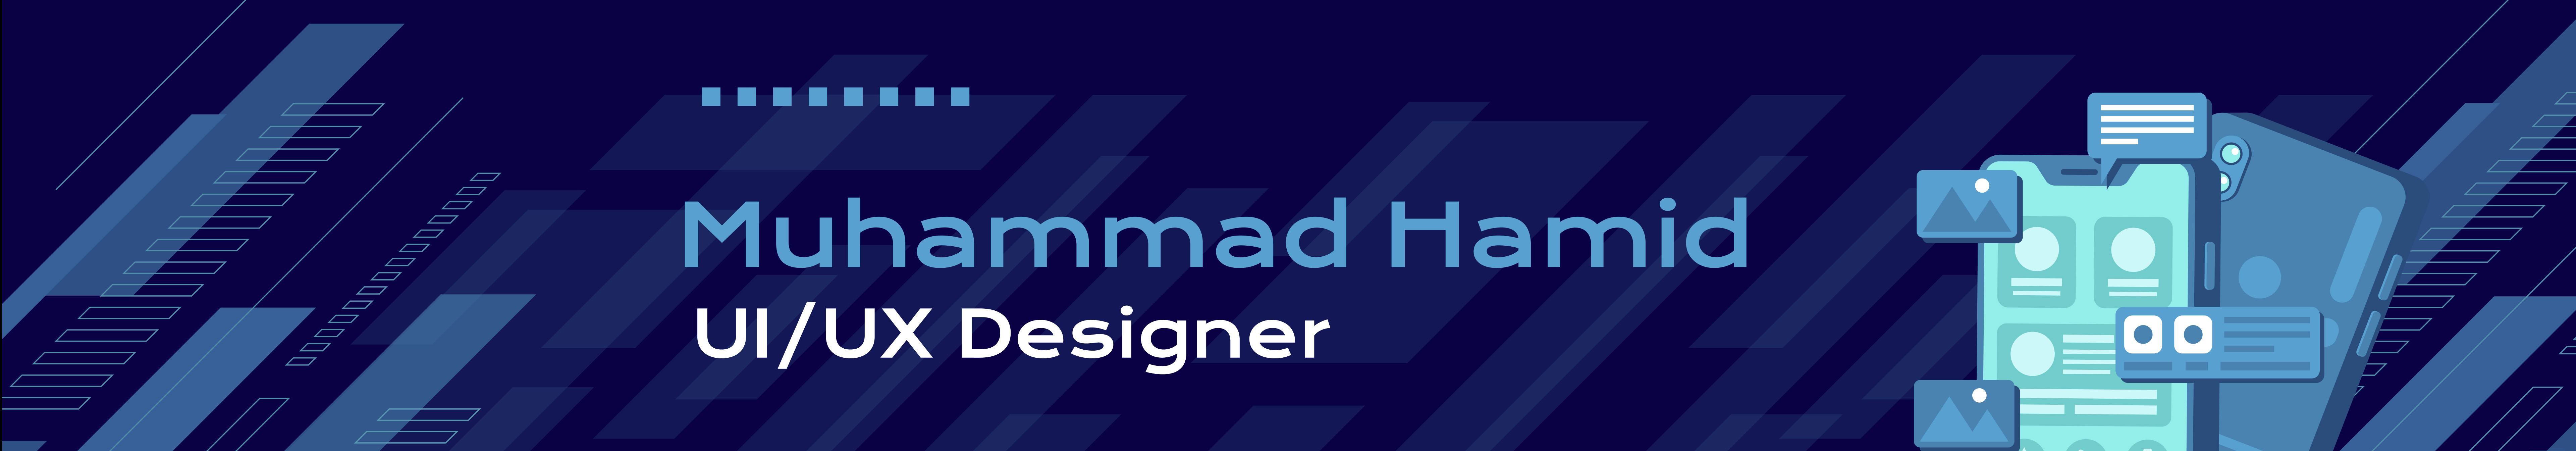 Muhammad Hamid's profile banner